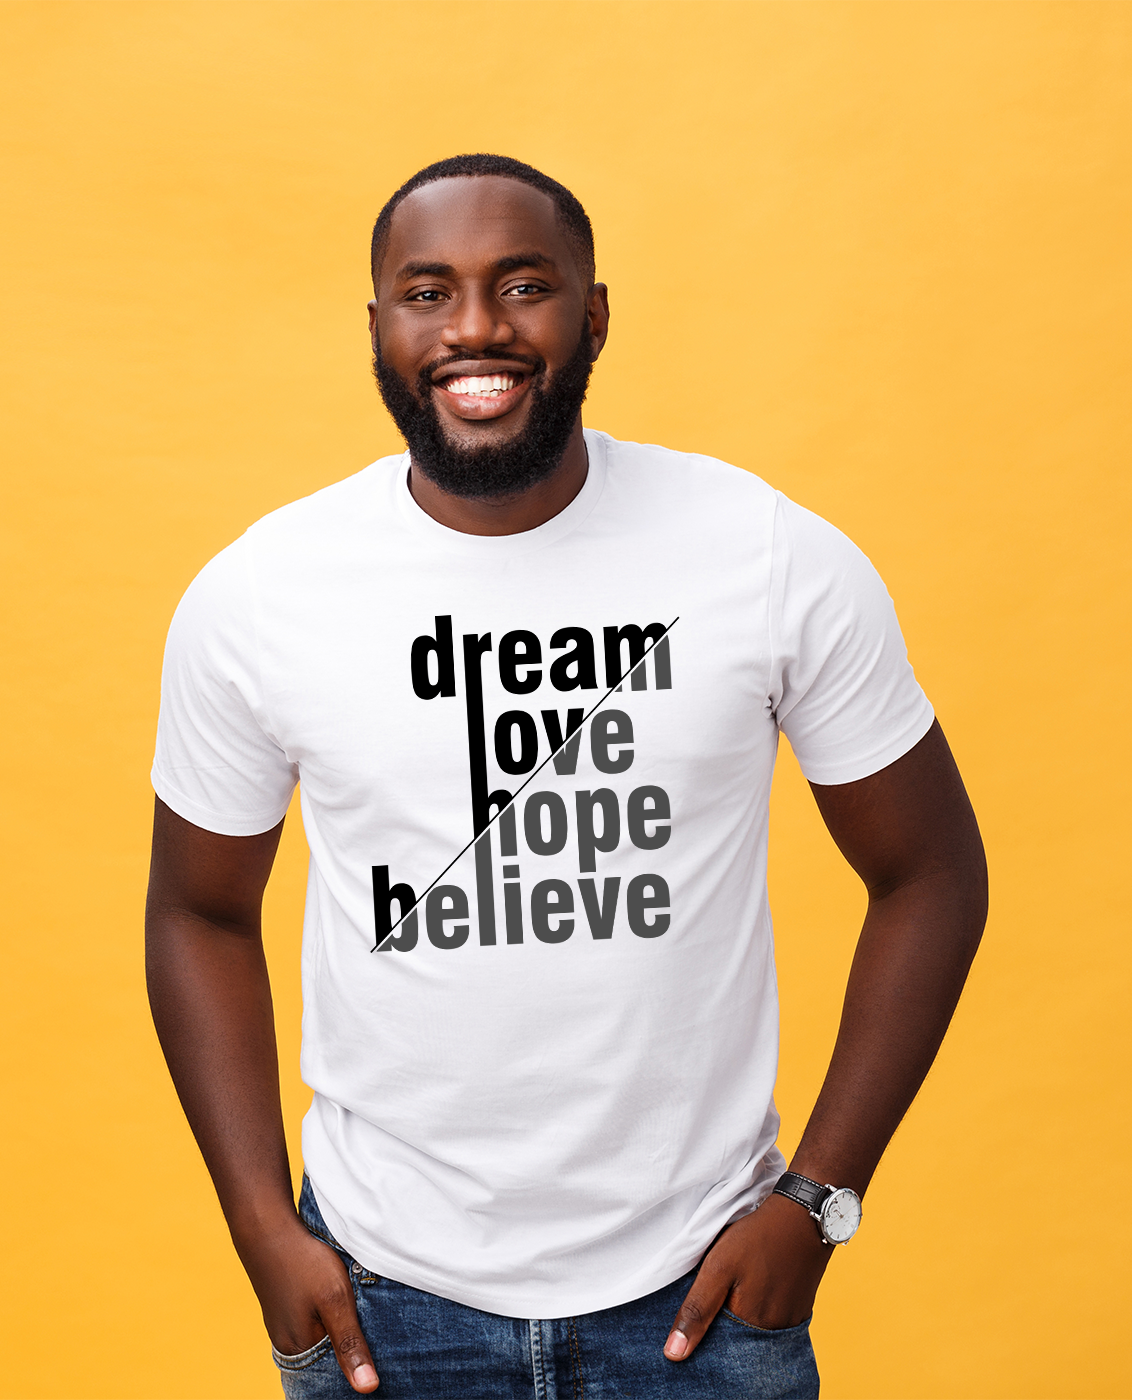 Dream. Love. Hope. Believe. Short-Sleeved T-Shirt